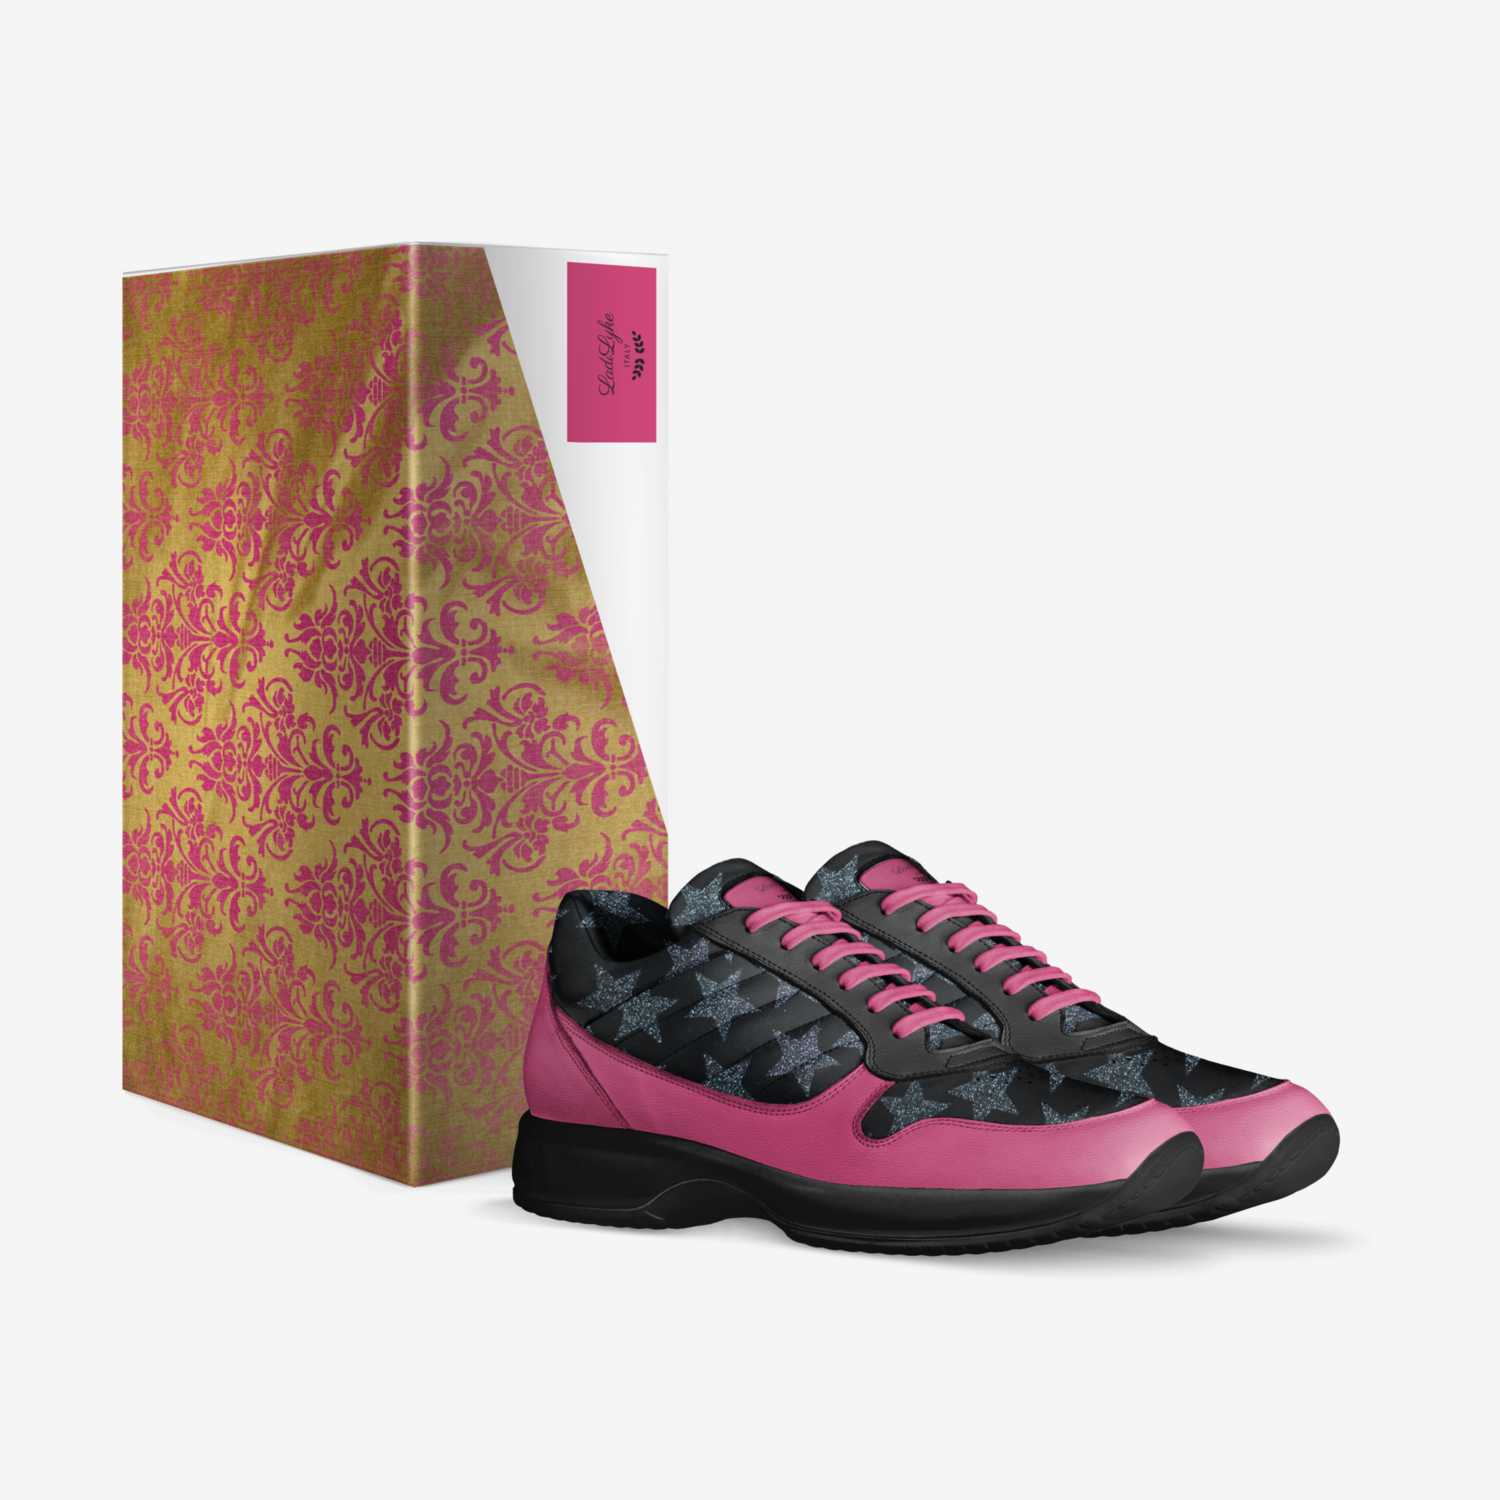 LadiLyke custom made in Italy shoes by Kiara Alexis | Box view